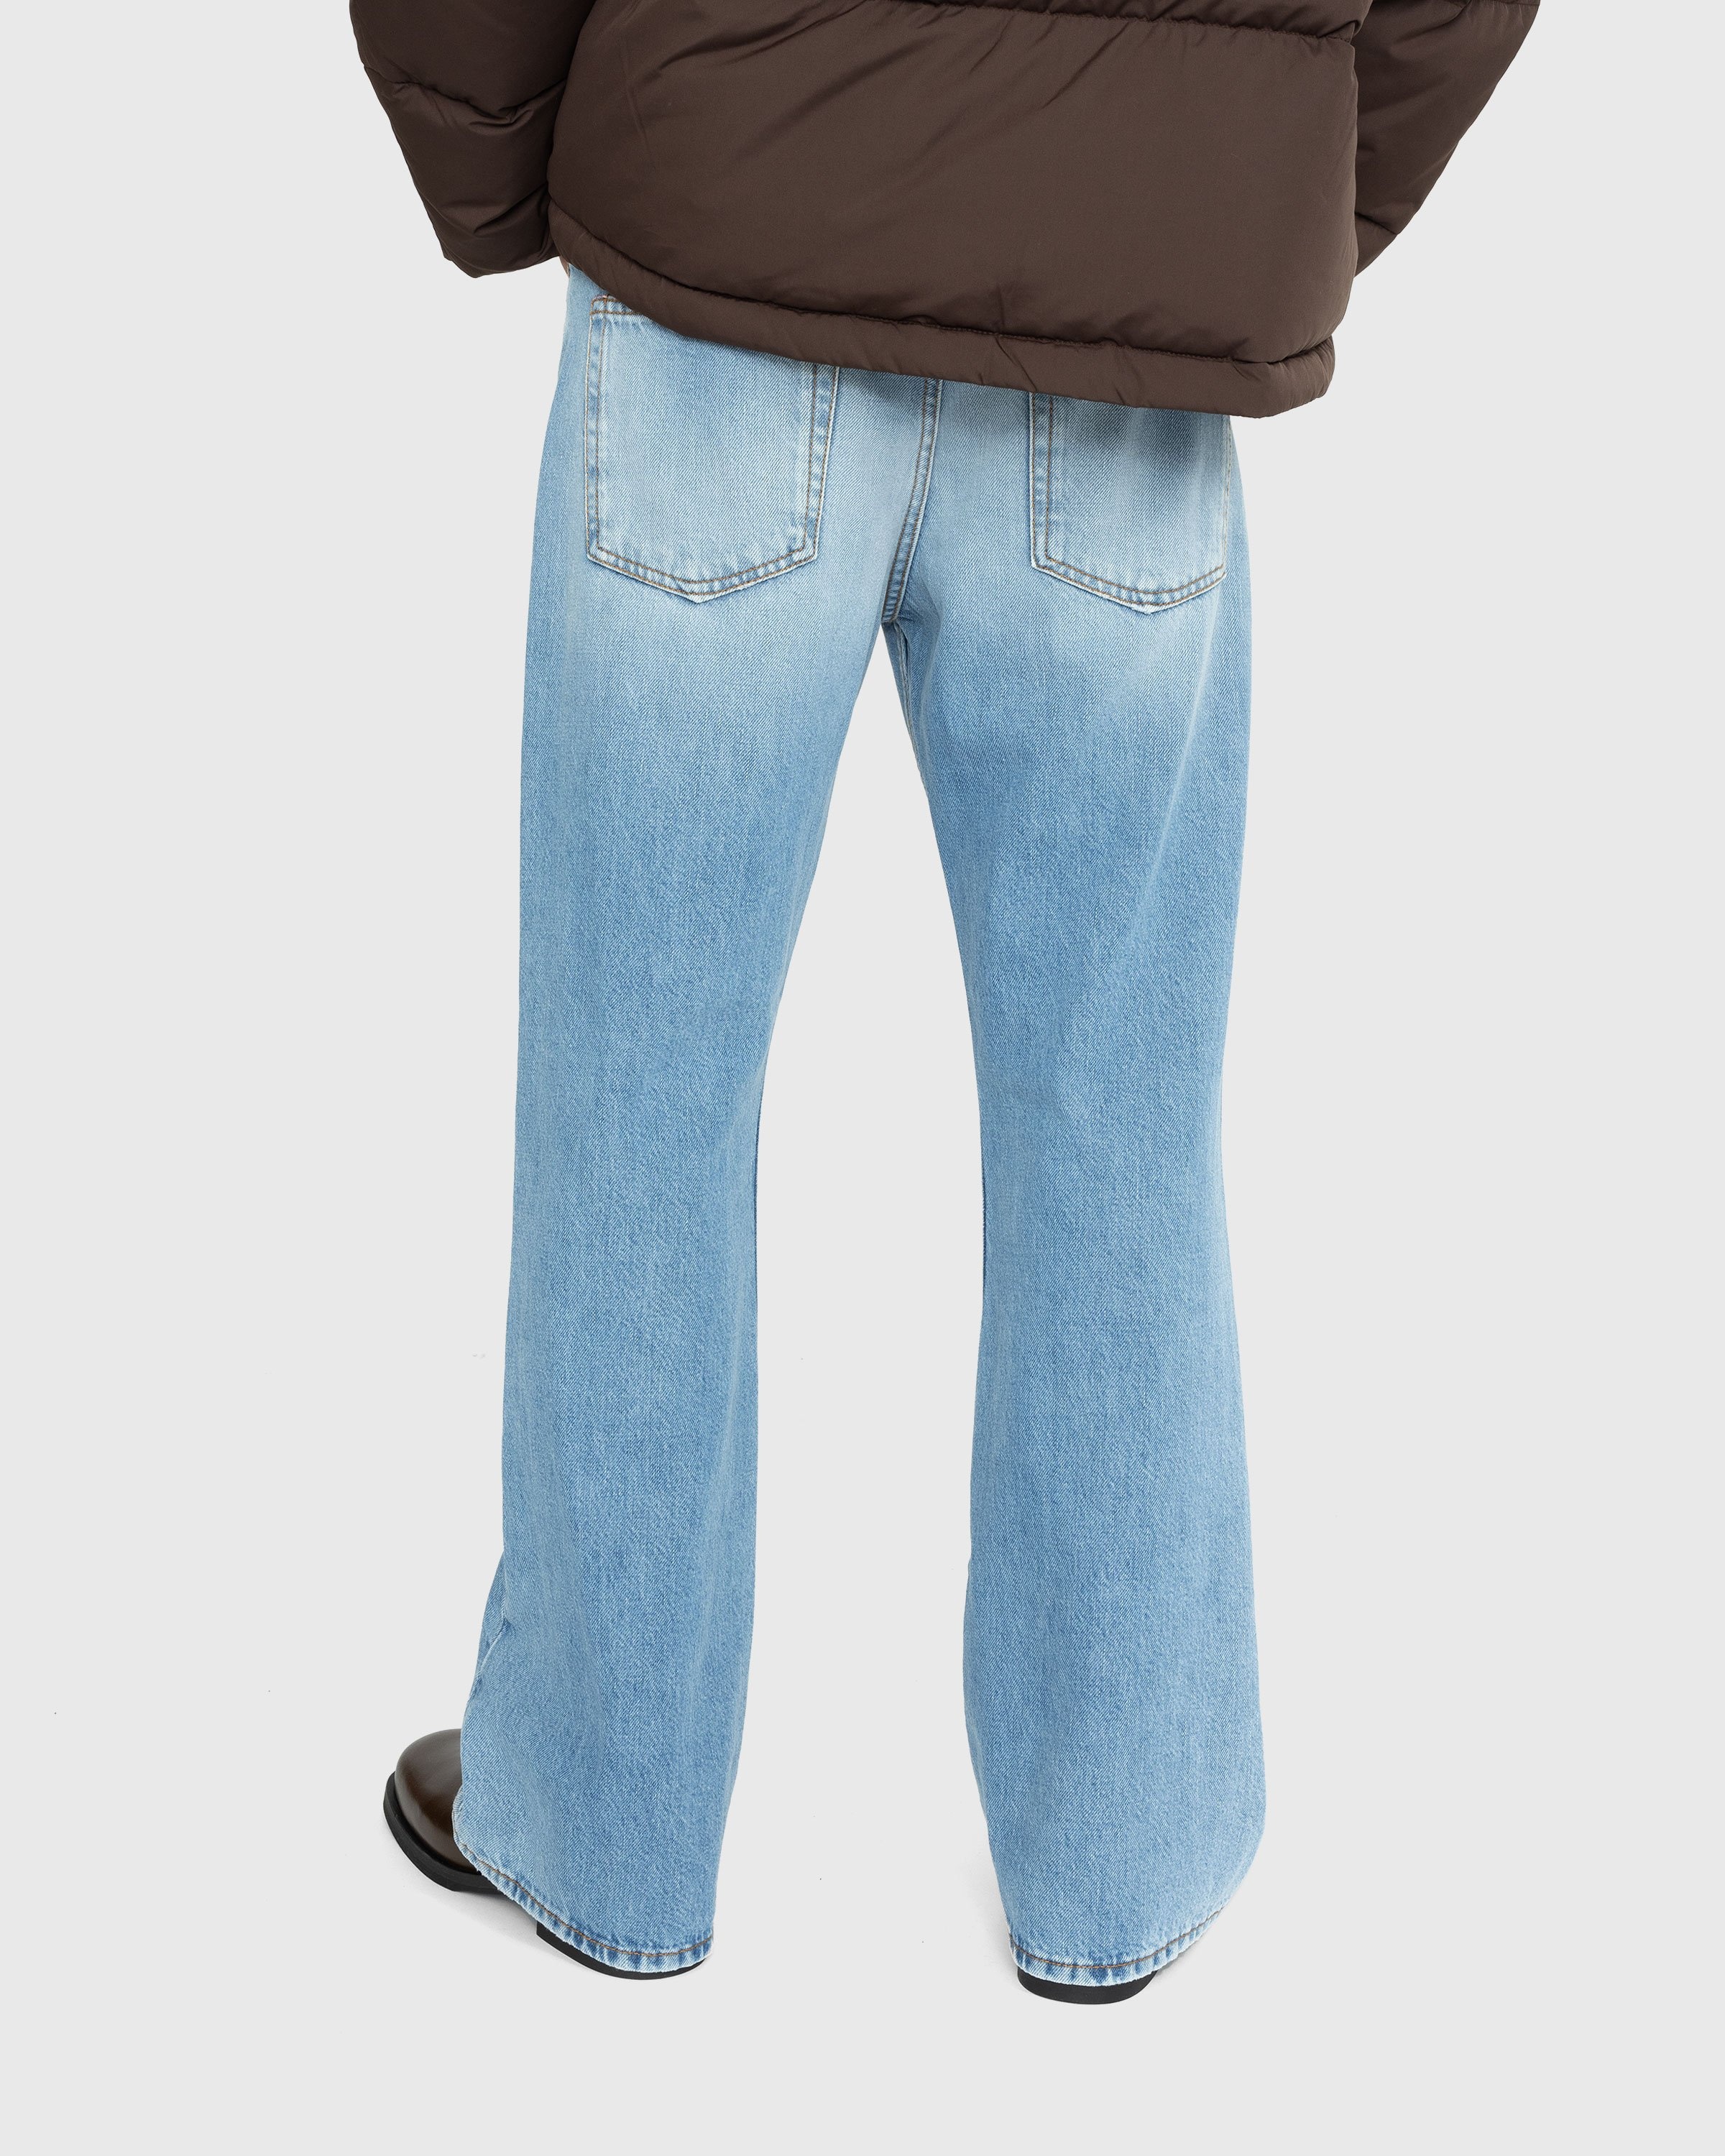 Acne Studios – Regular Fit Jeans 1992 Light Blue Vintage - Pants - Blue - Image 3